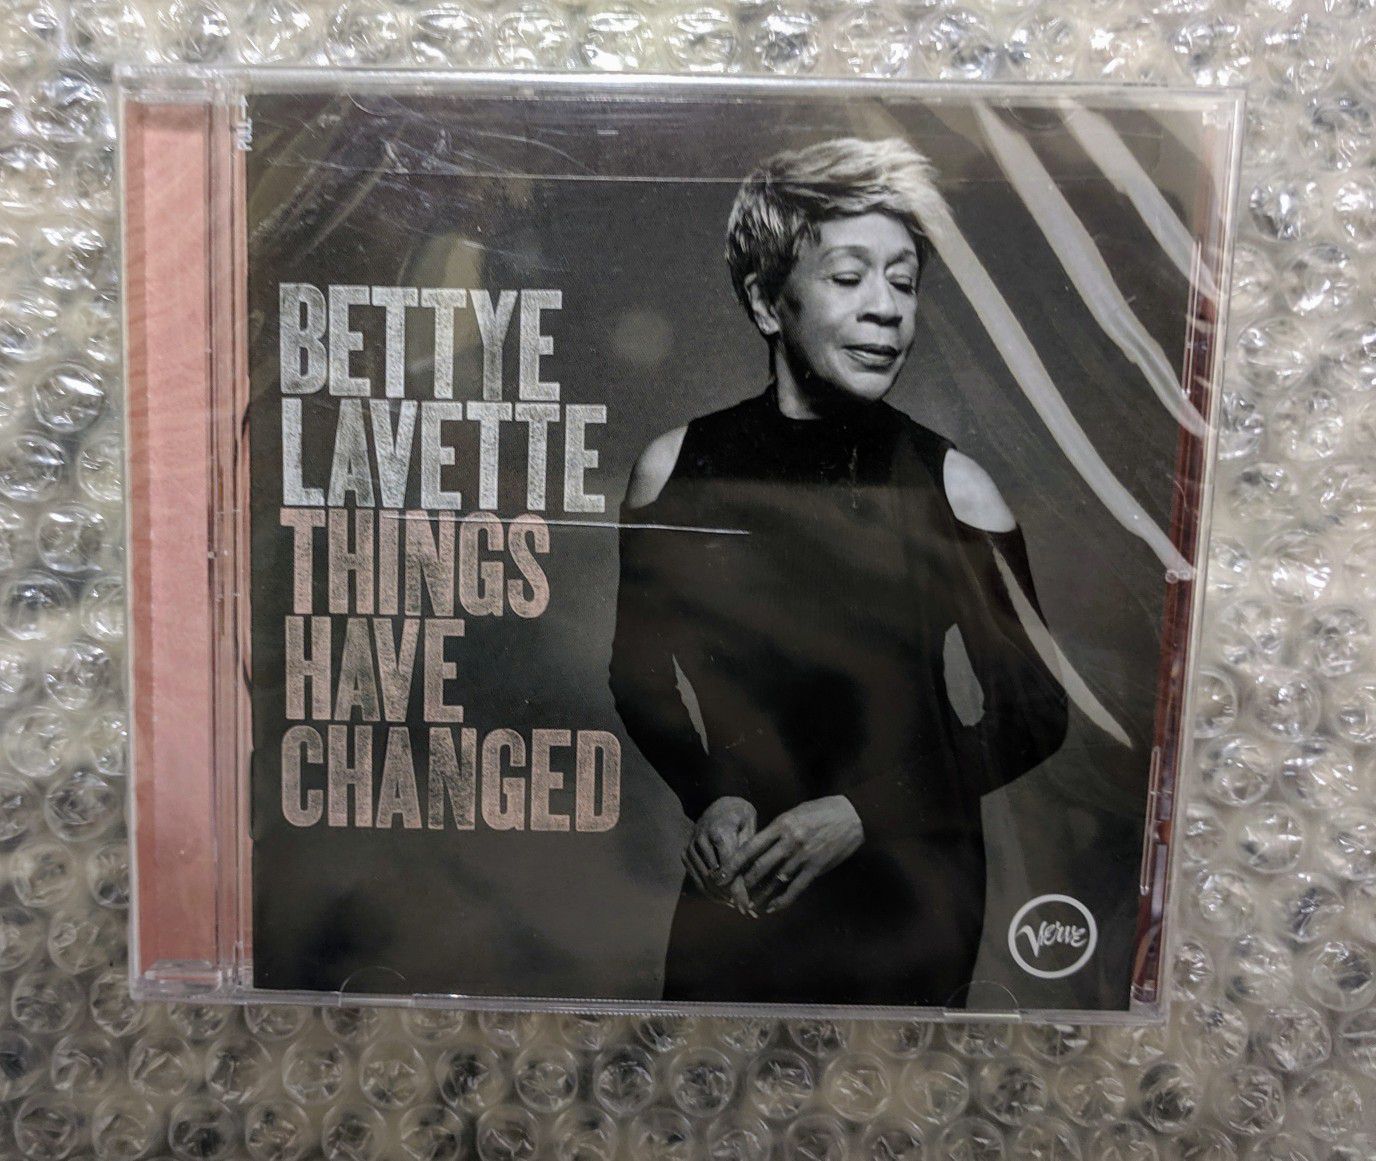 Bettye LaVette: Things Have Changed CD Verve 2018 [NEW] R&B/SOUL (Bob Dylan)